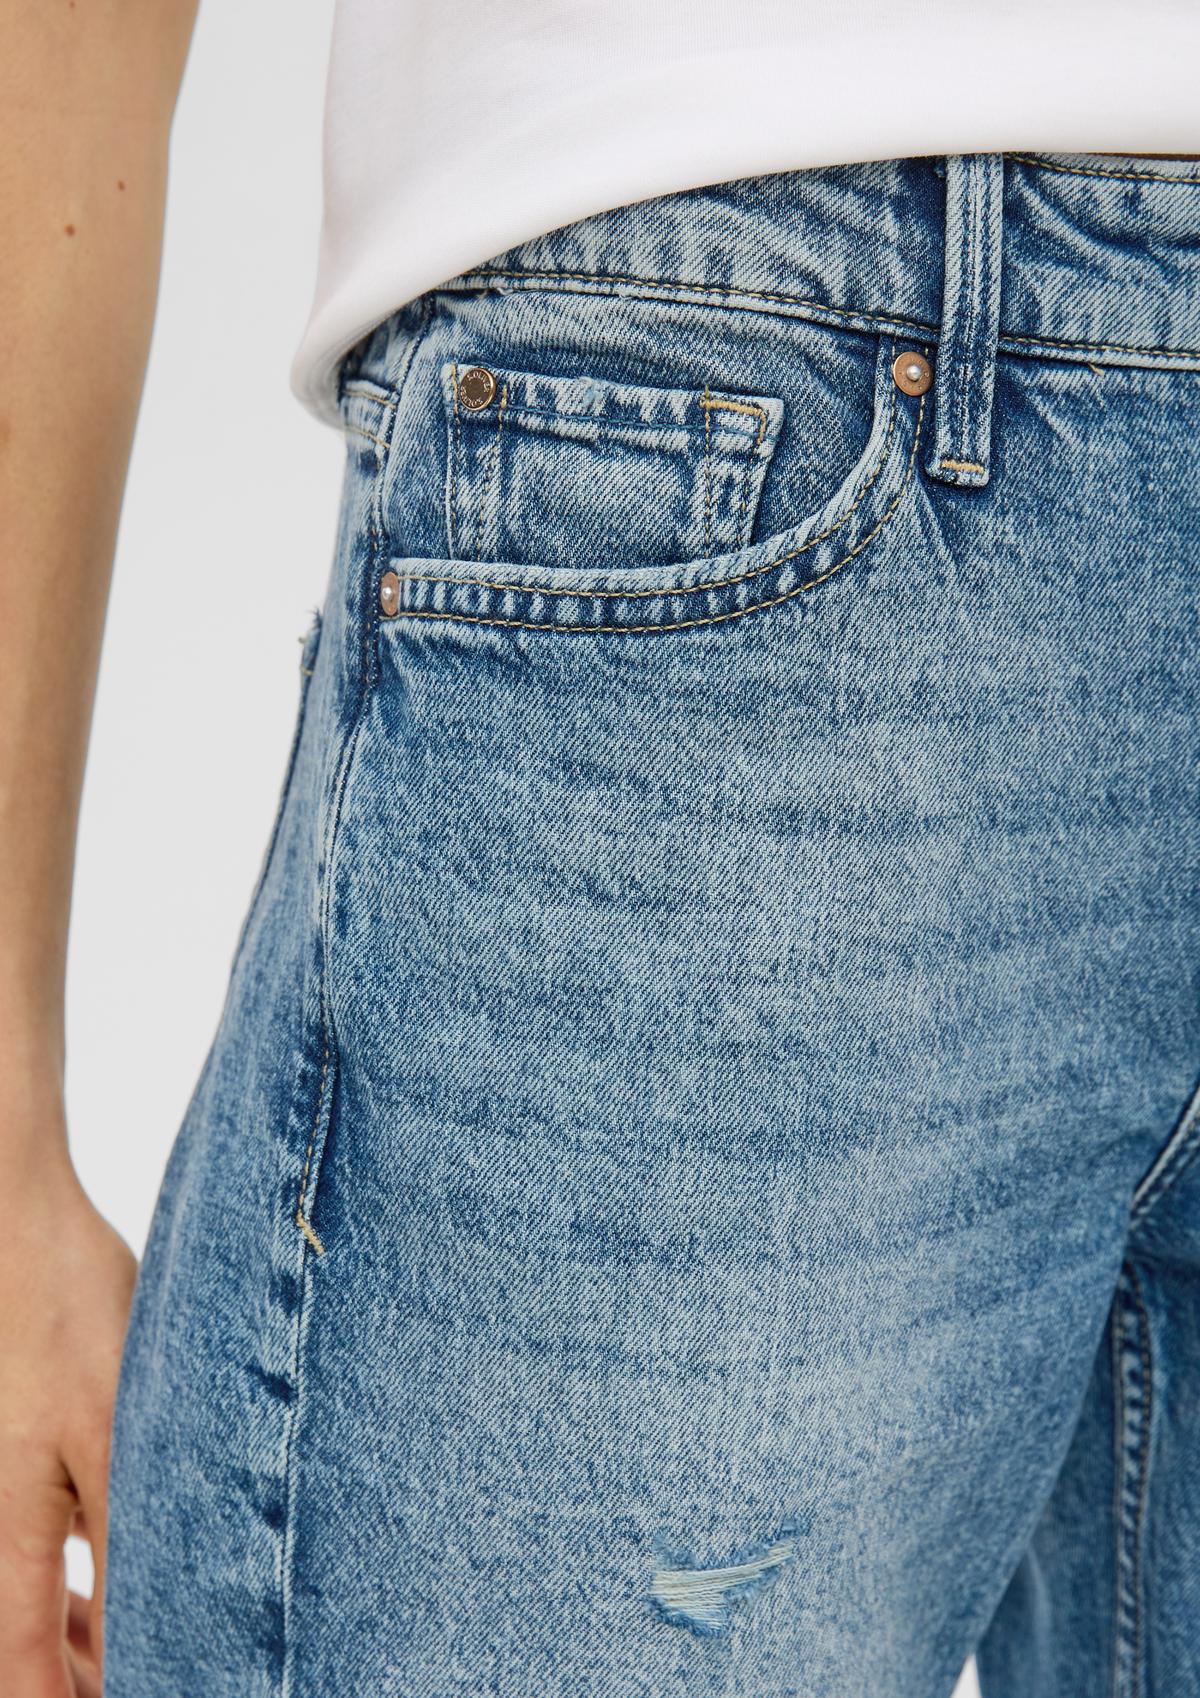 s.Oliver Karolin jeans / Regular Fit / Mid Rise / Straight Leg